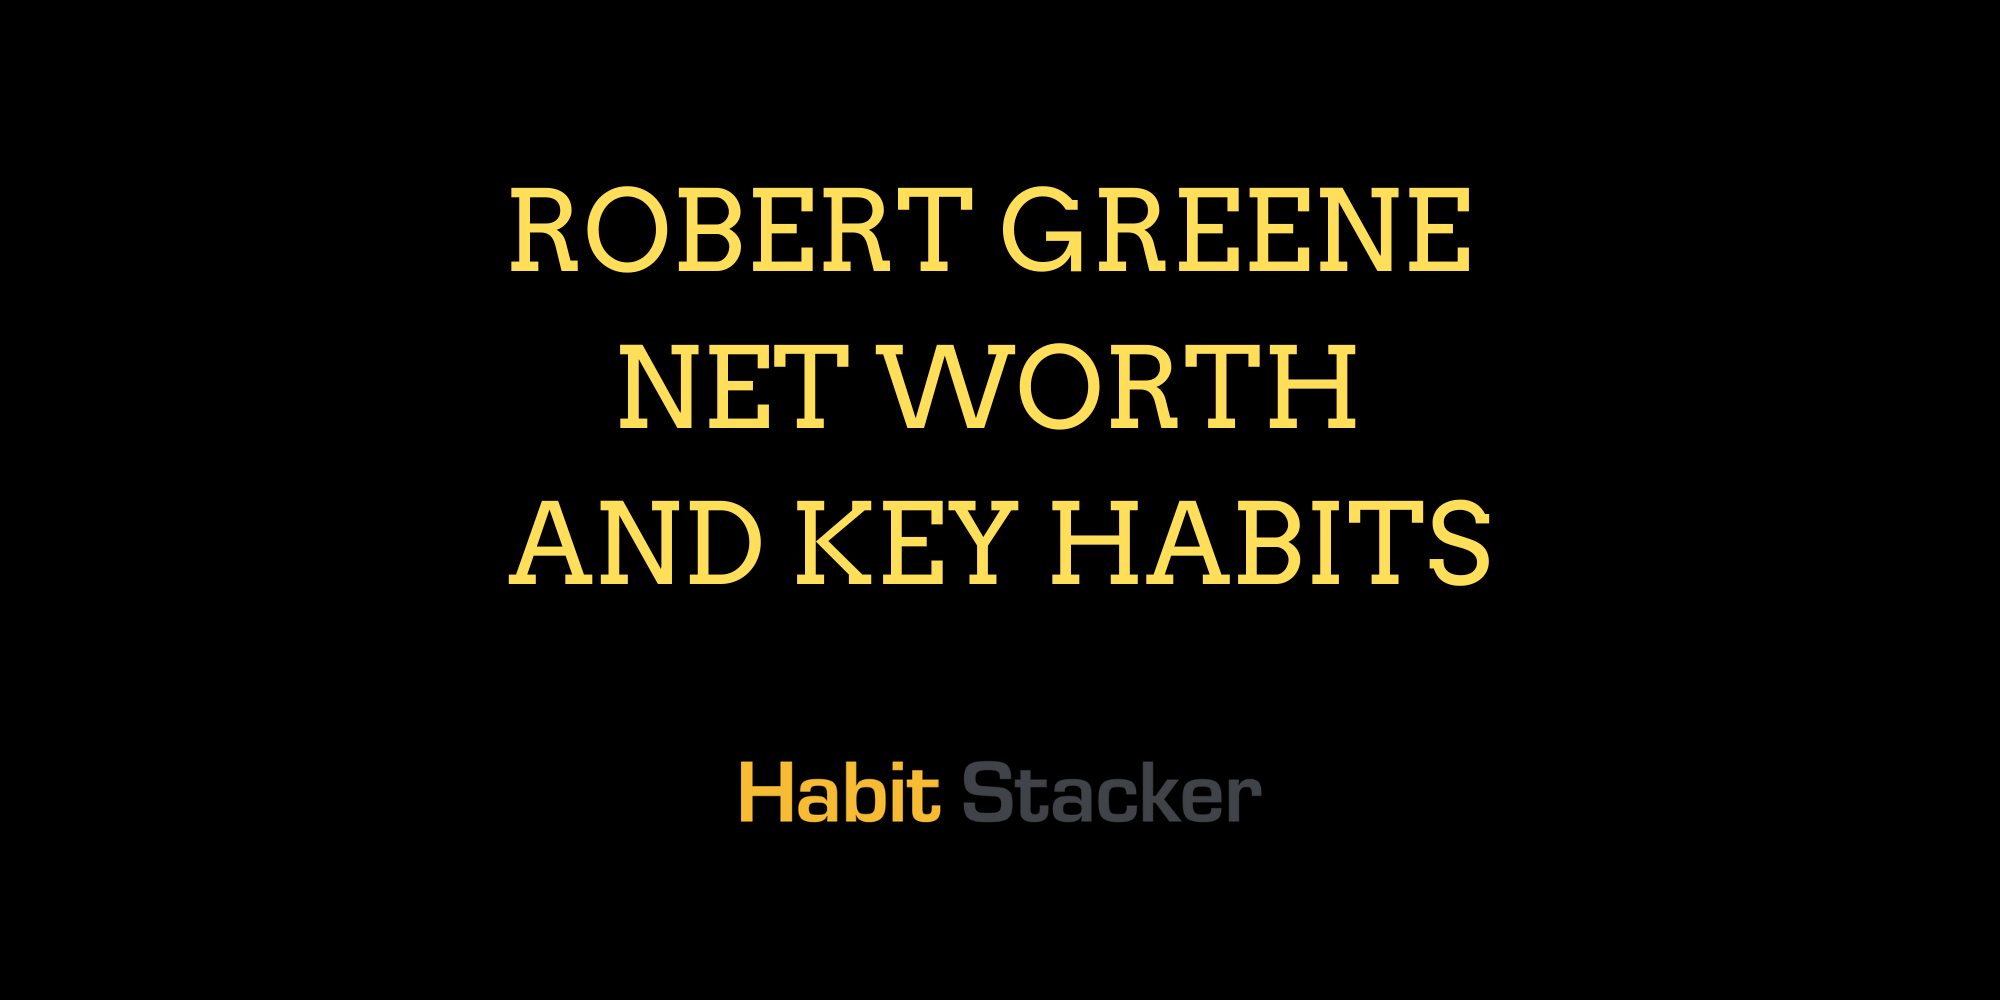 Robert Greene Net Worth And Key Habits